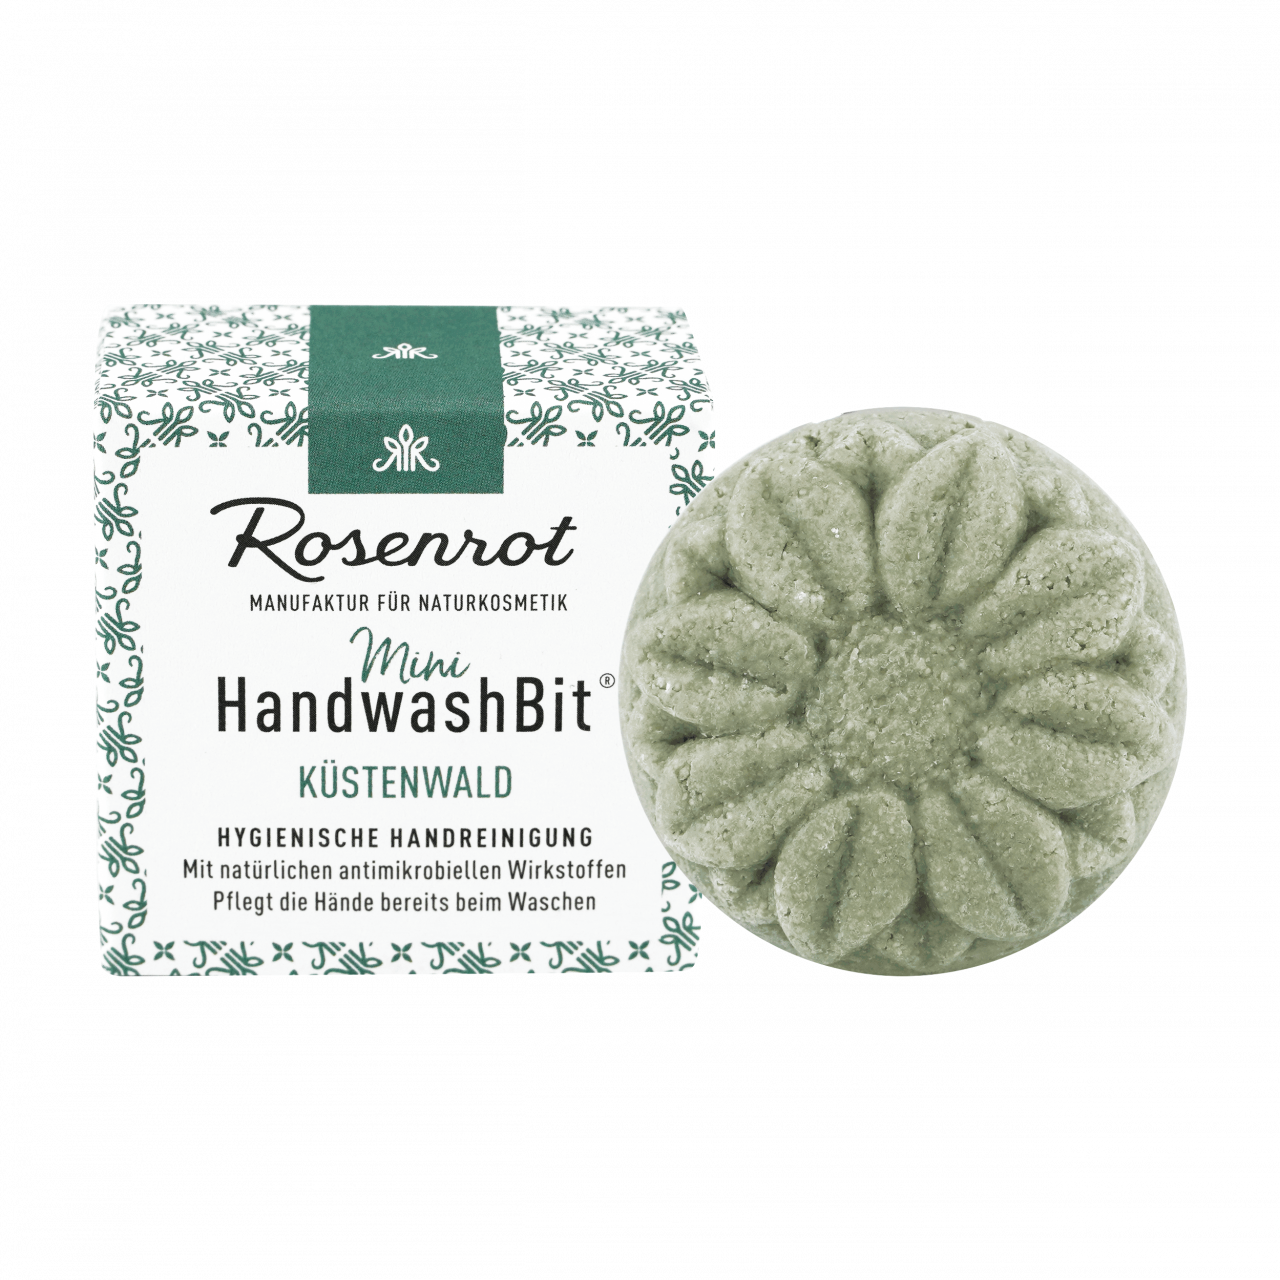 HandwashBit® - solid wash lotion coastal forest.